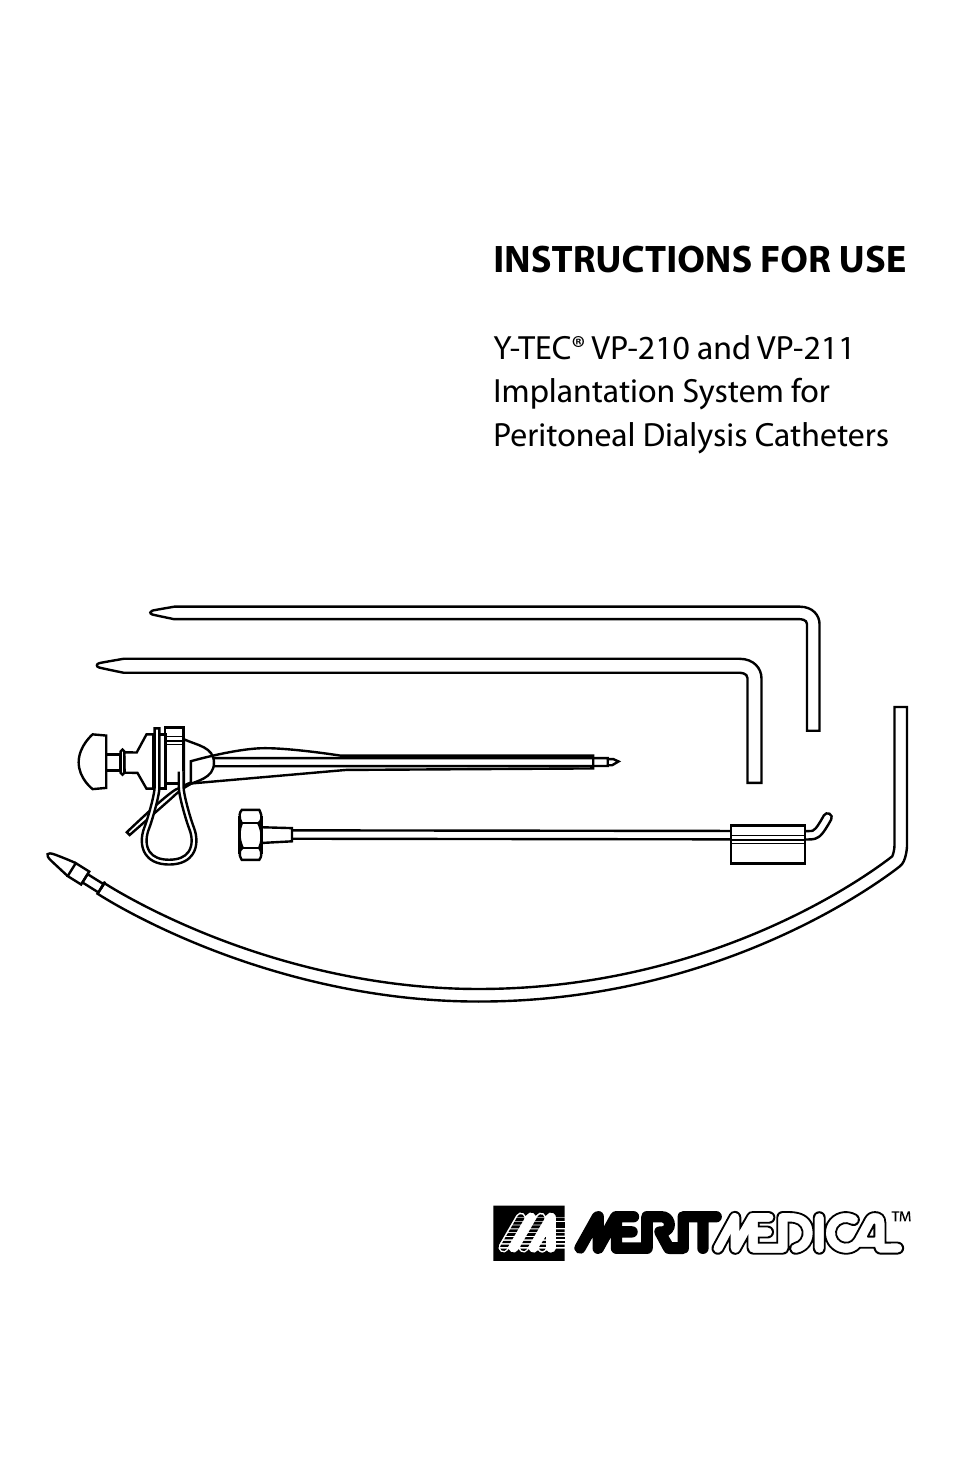 VP-211 PD Catheter Implantation System